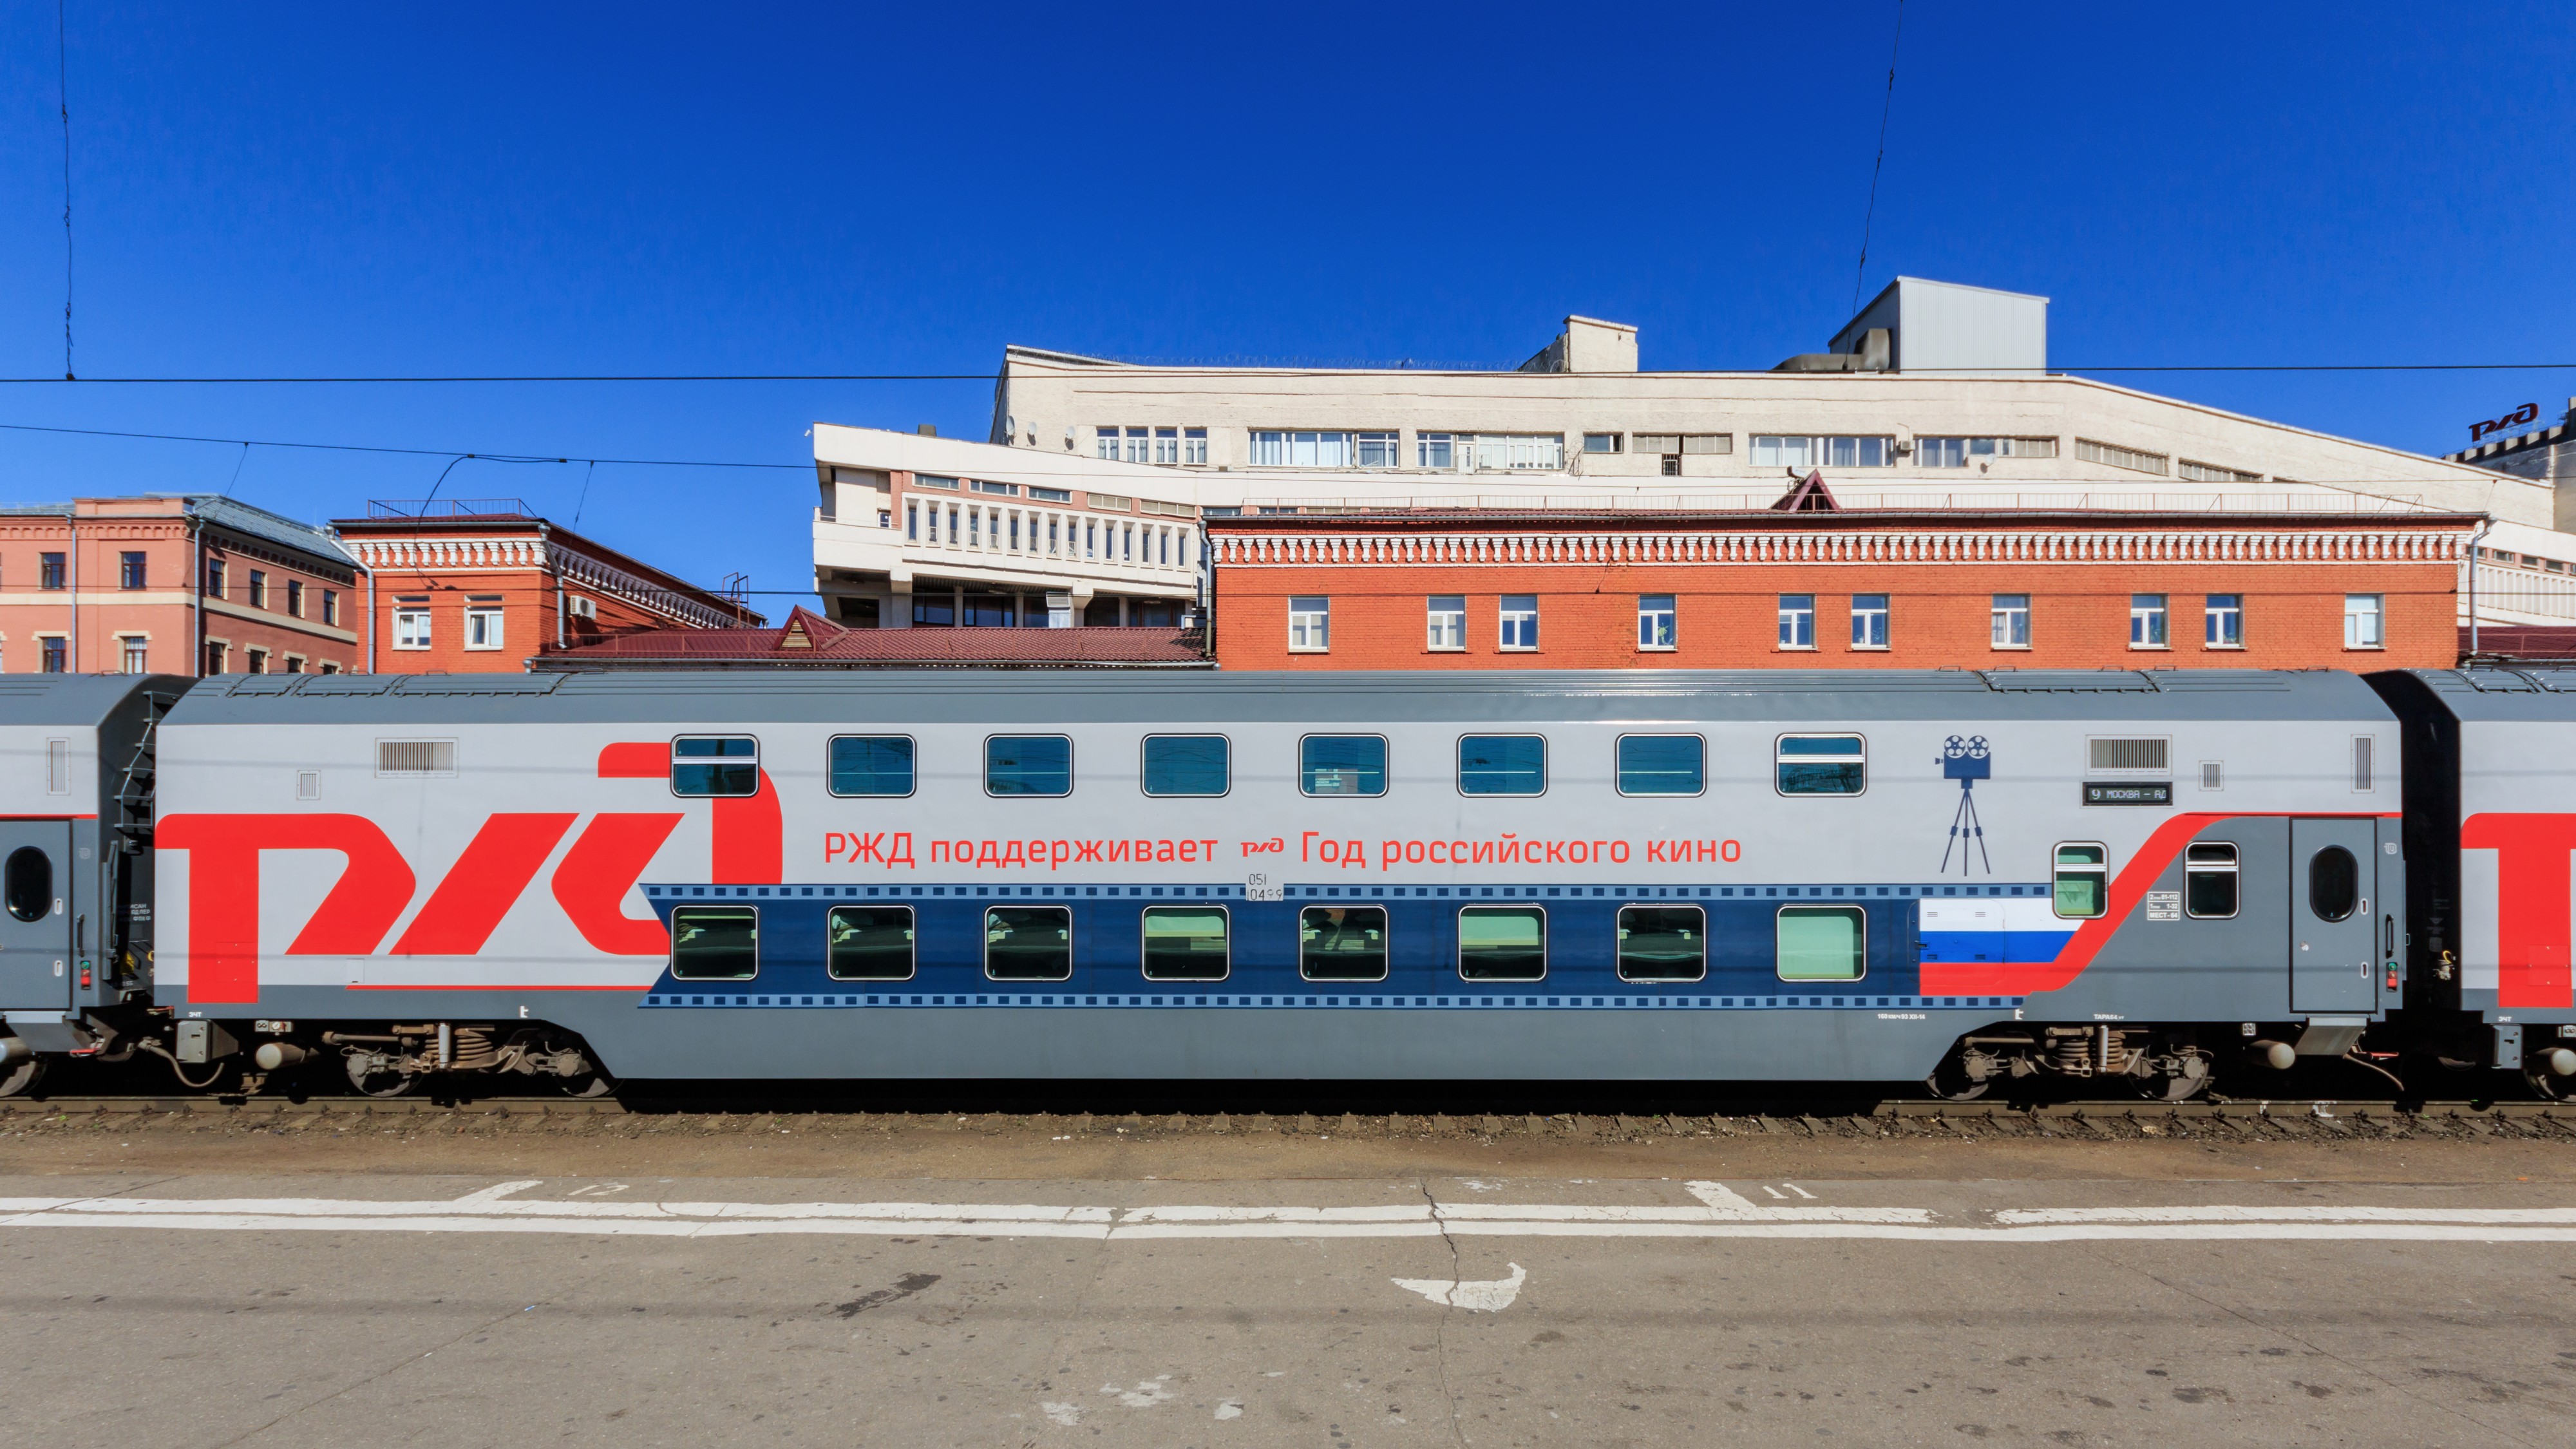 Moscow Kazansky Station TVZ doubledecker train 08-2016 img2